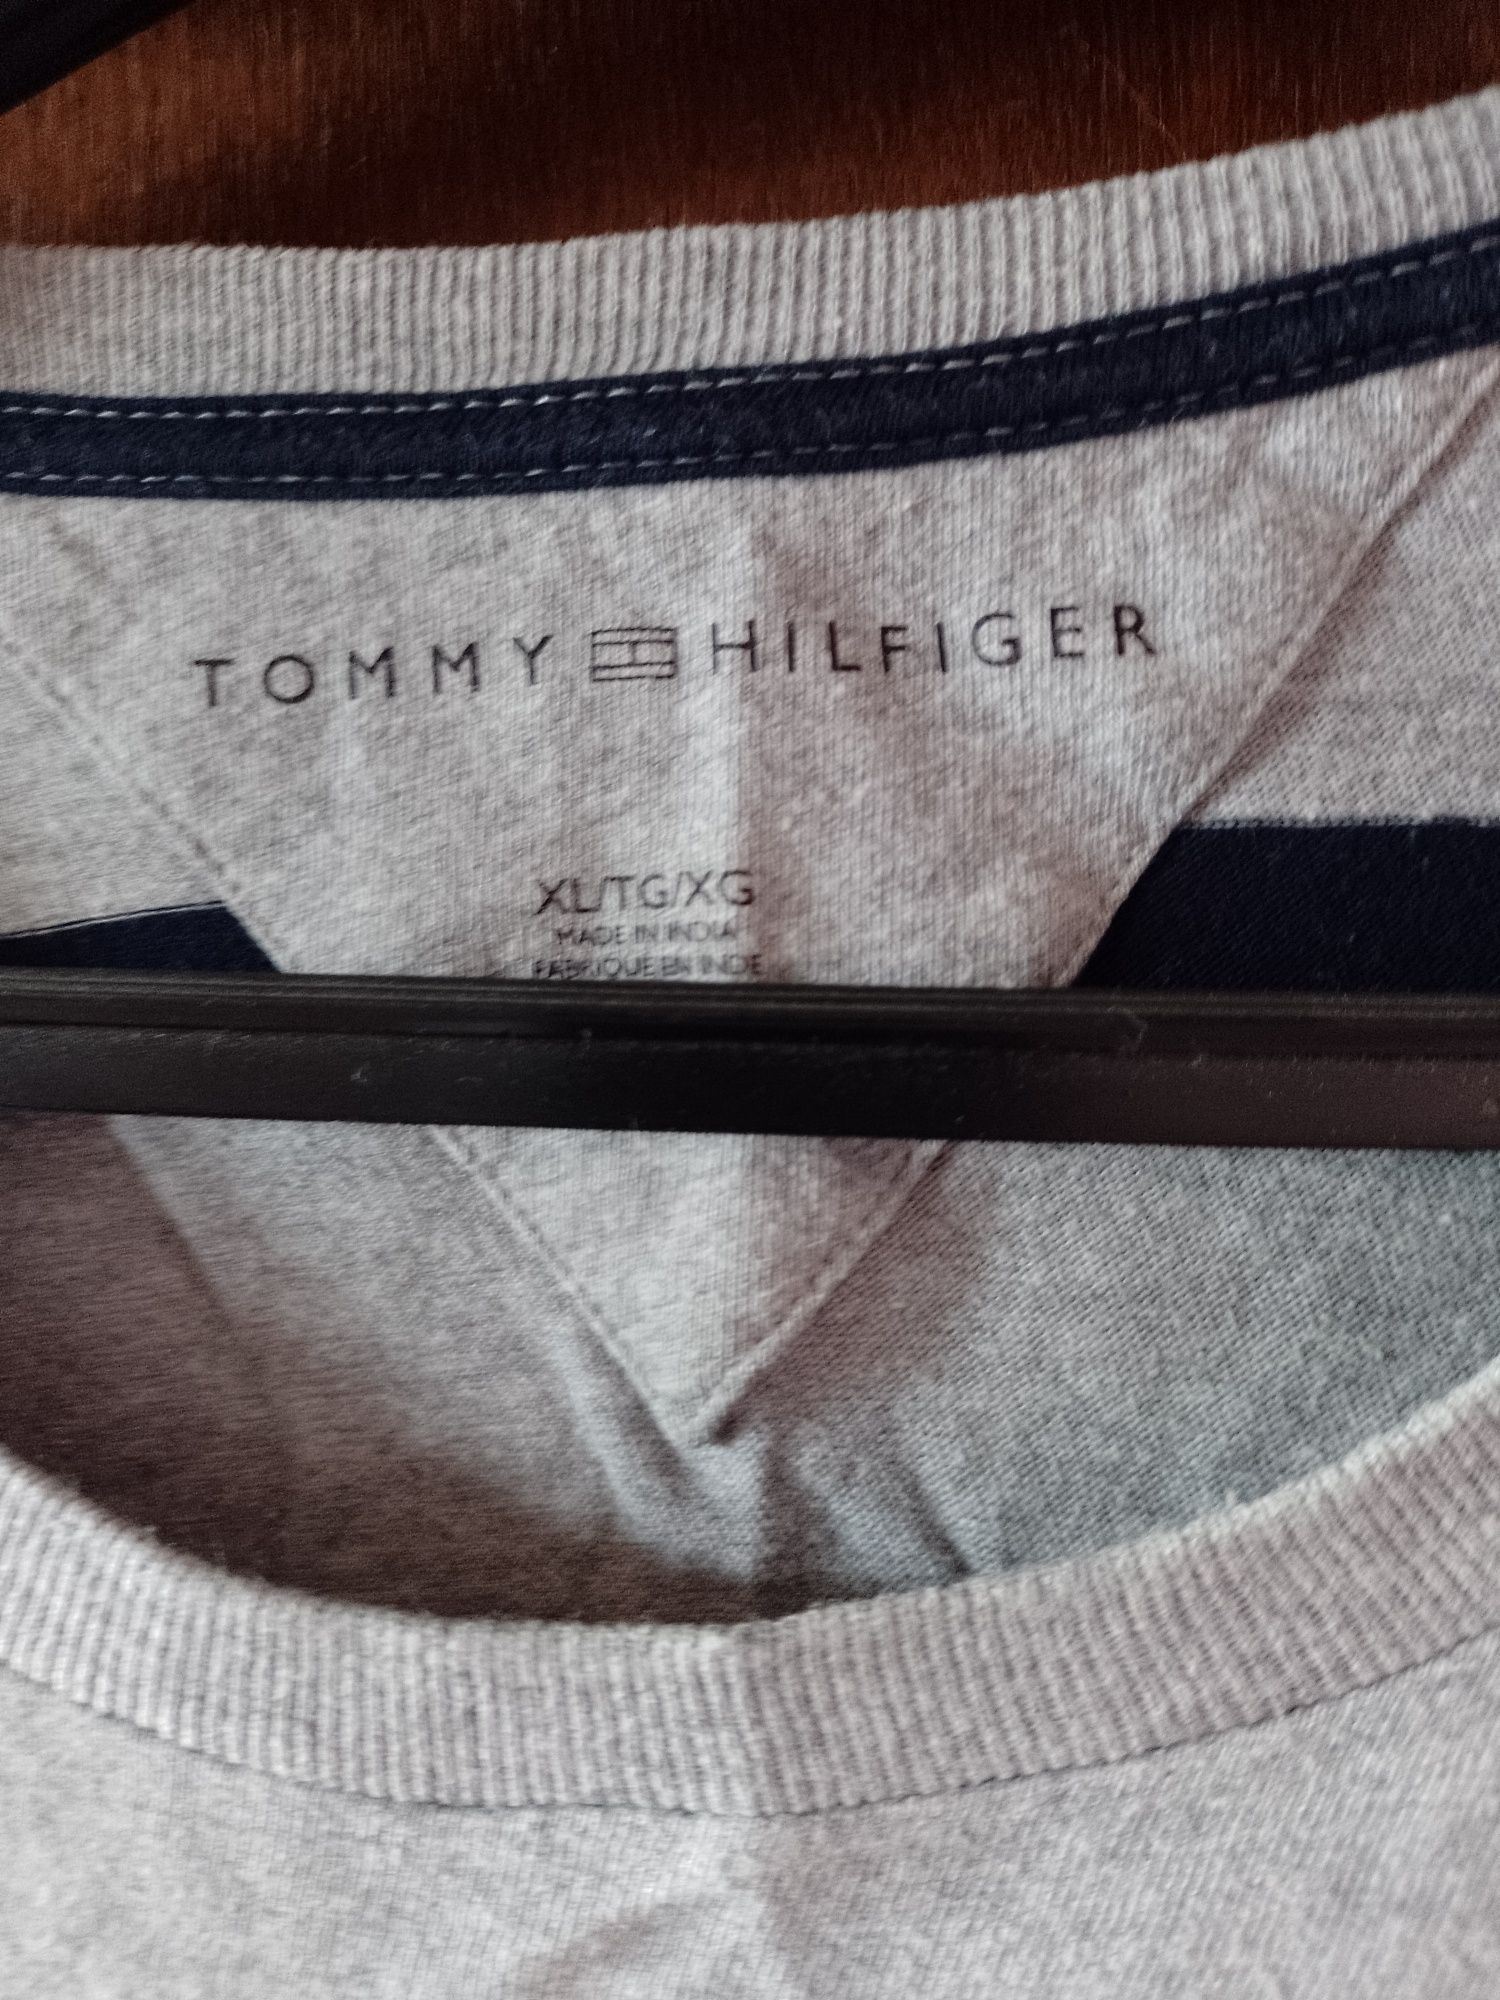 T-shirt Tommy Hilfiger xl używany